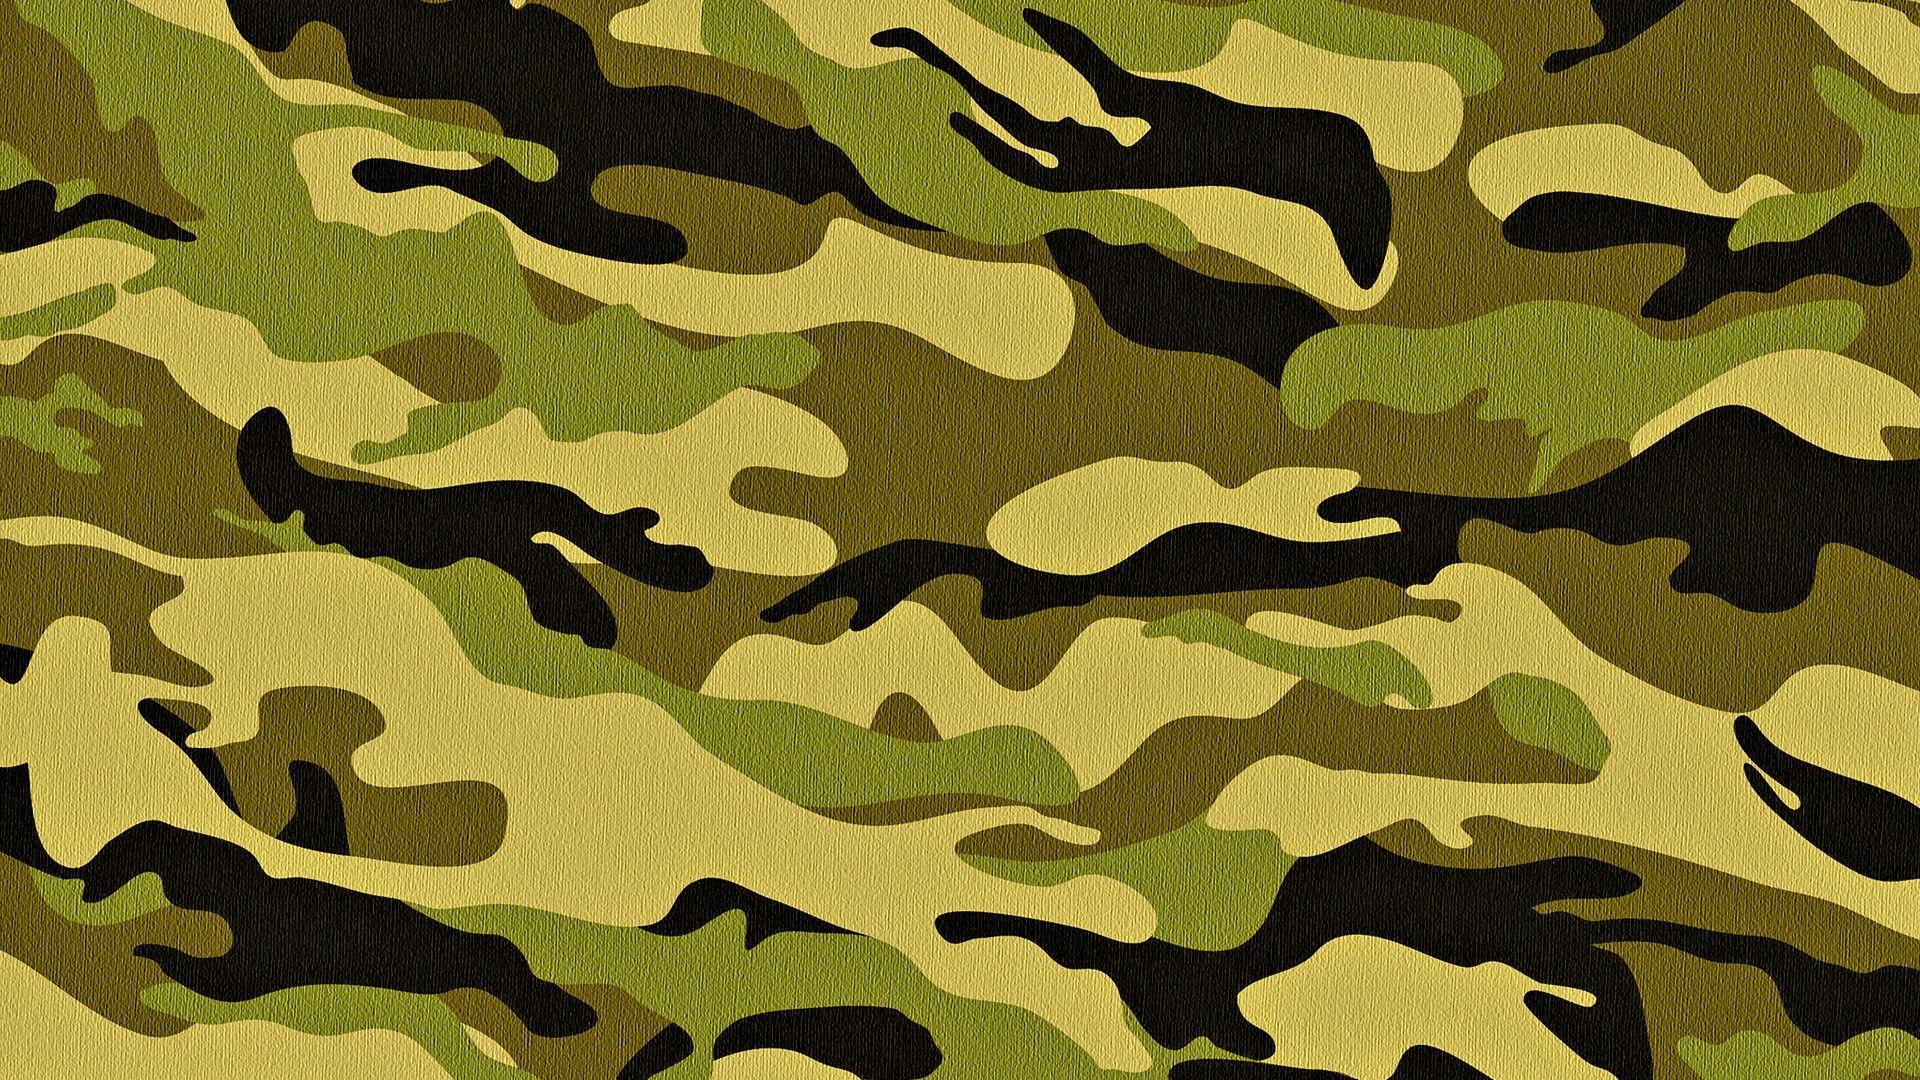 Camouflage Wallpaper. Impressive Camouflage Image. GuoGuiyan